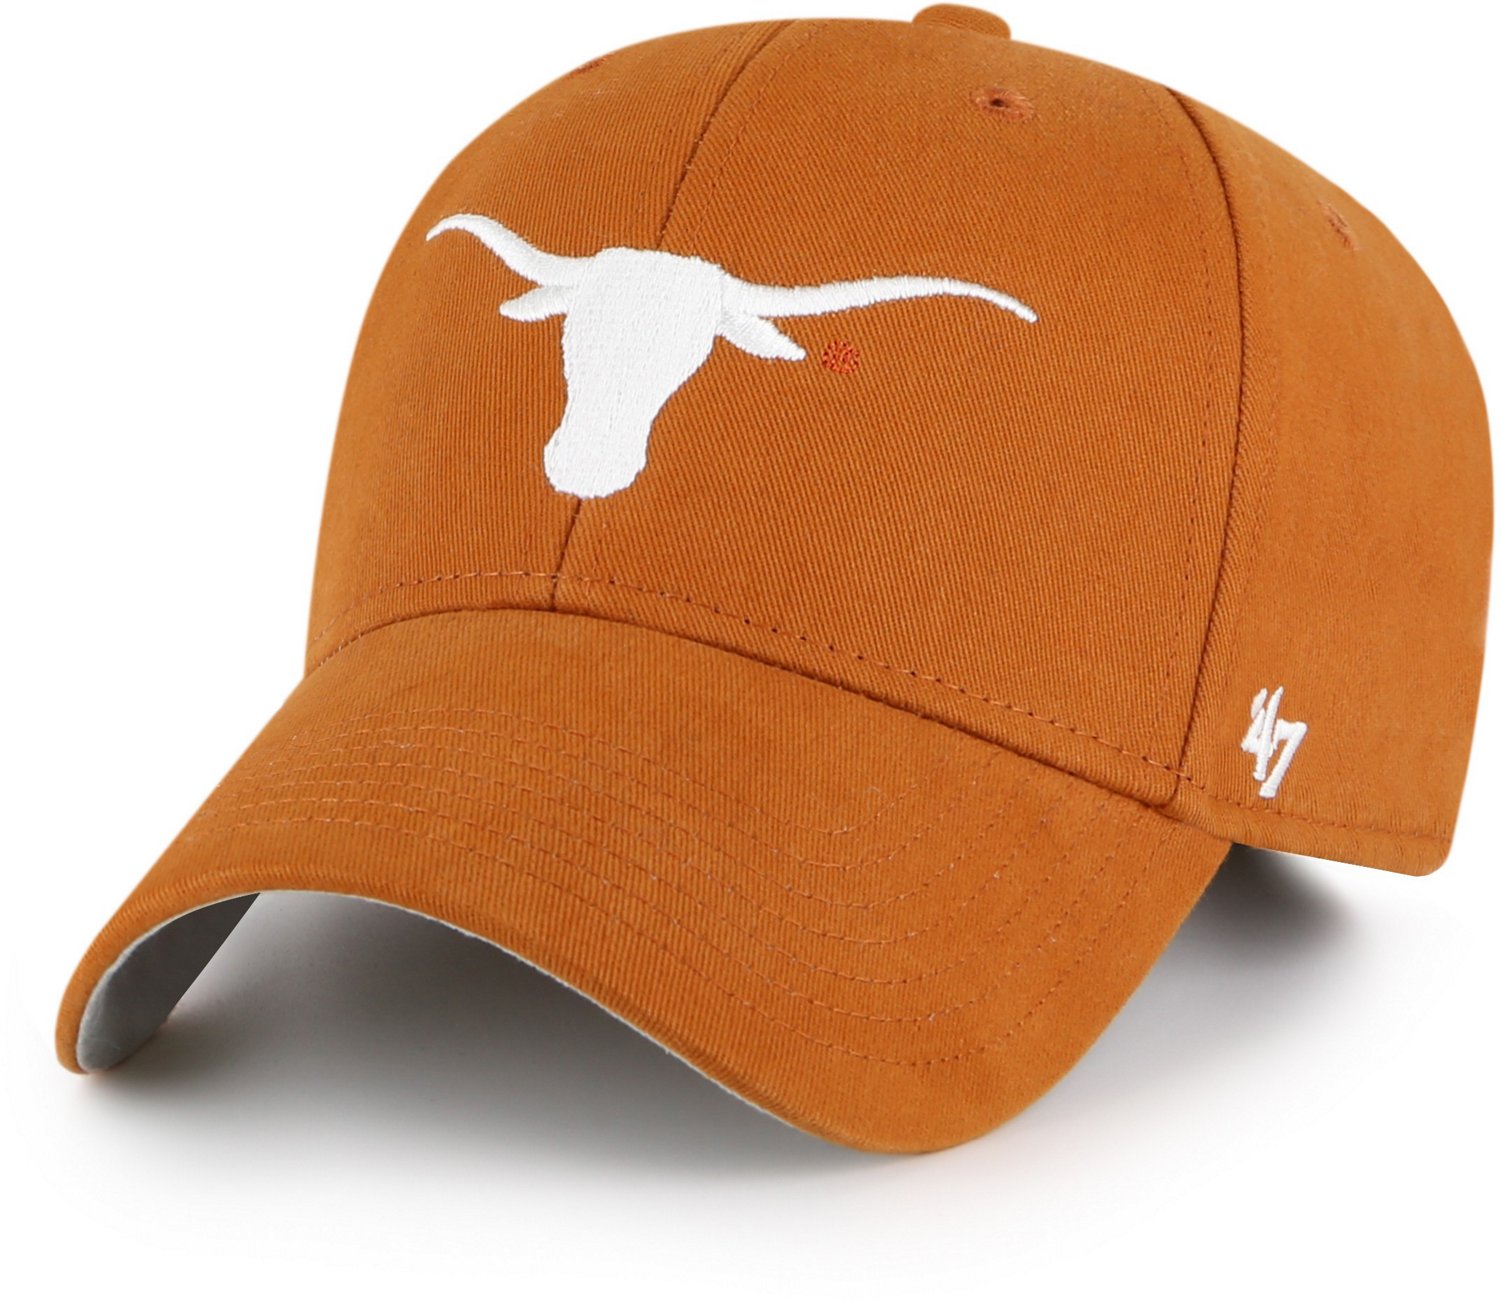 Texas Baseball Gear, Texas Longhorns Baseball Jerseys, University of Texas  at Austin Baseball Hats, Apparel